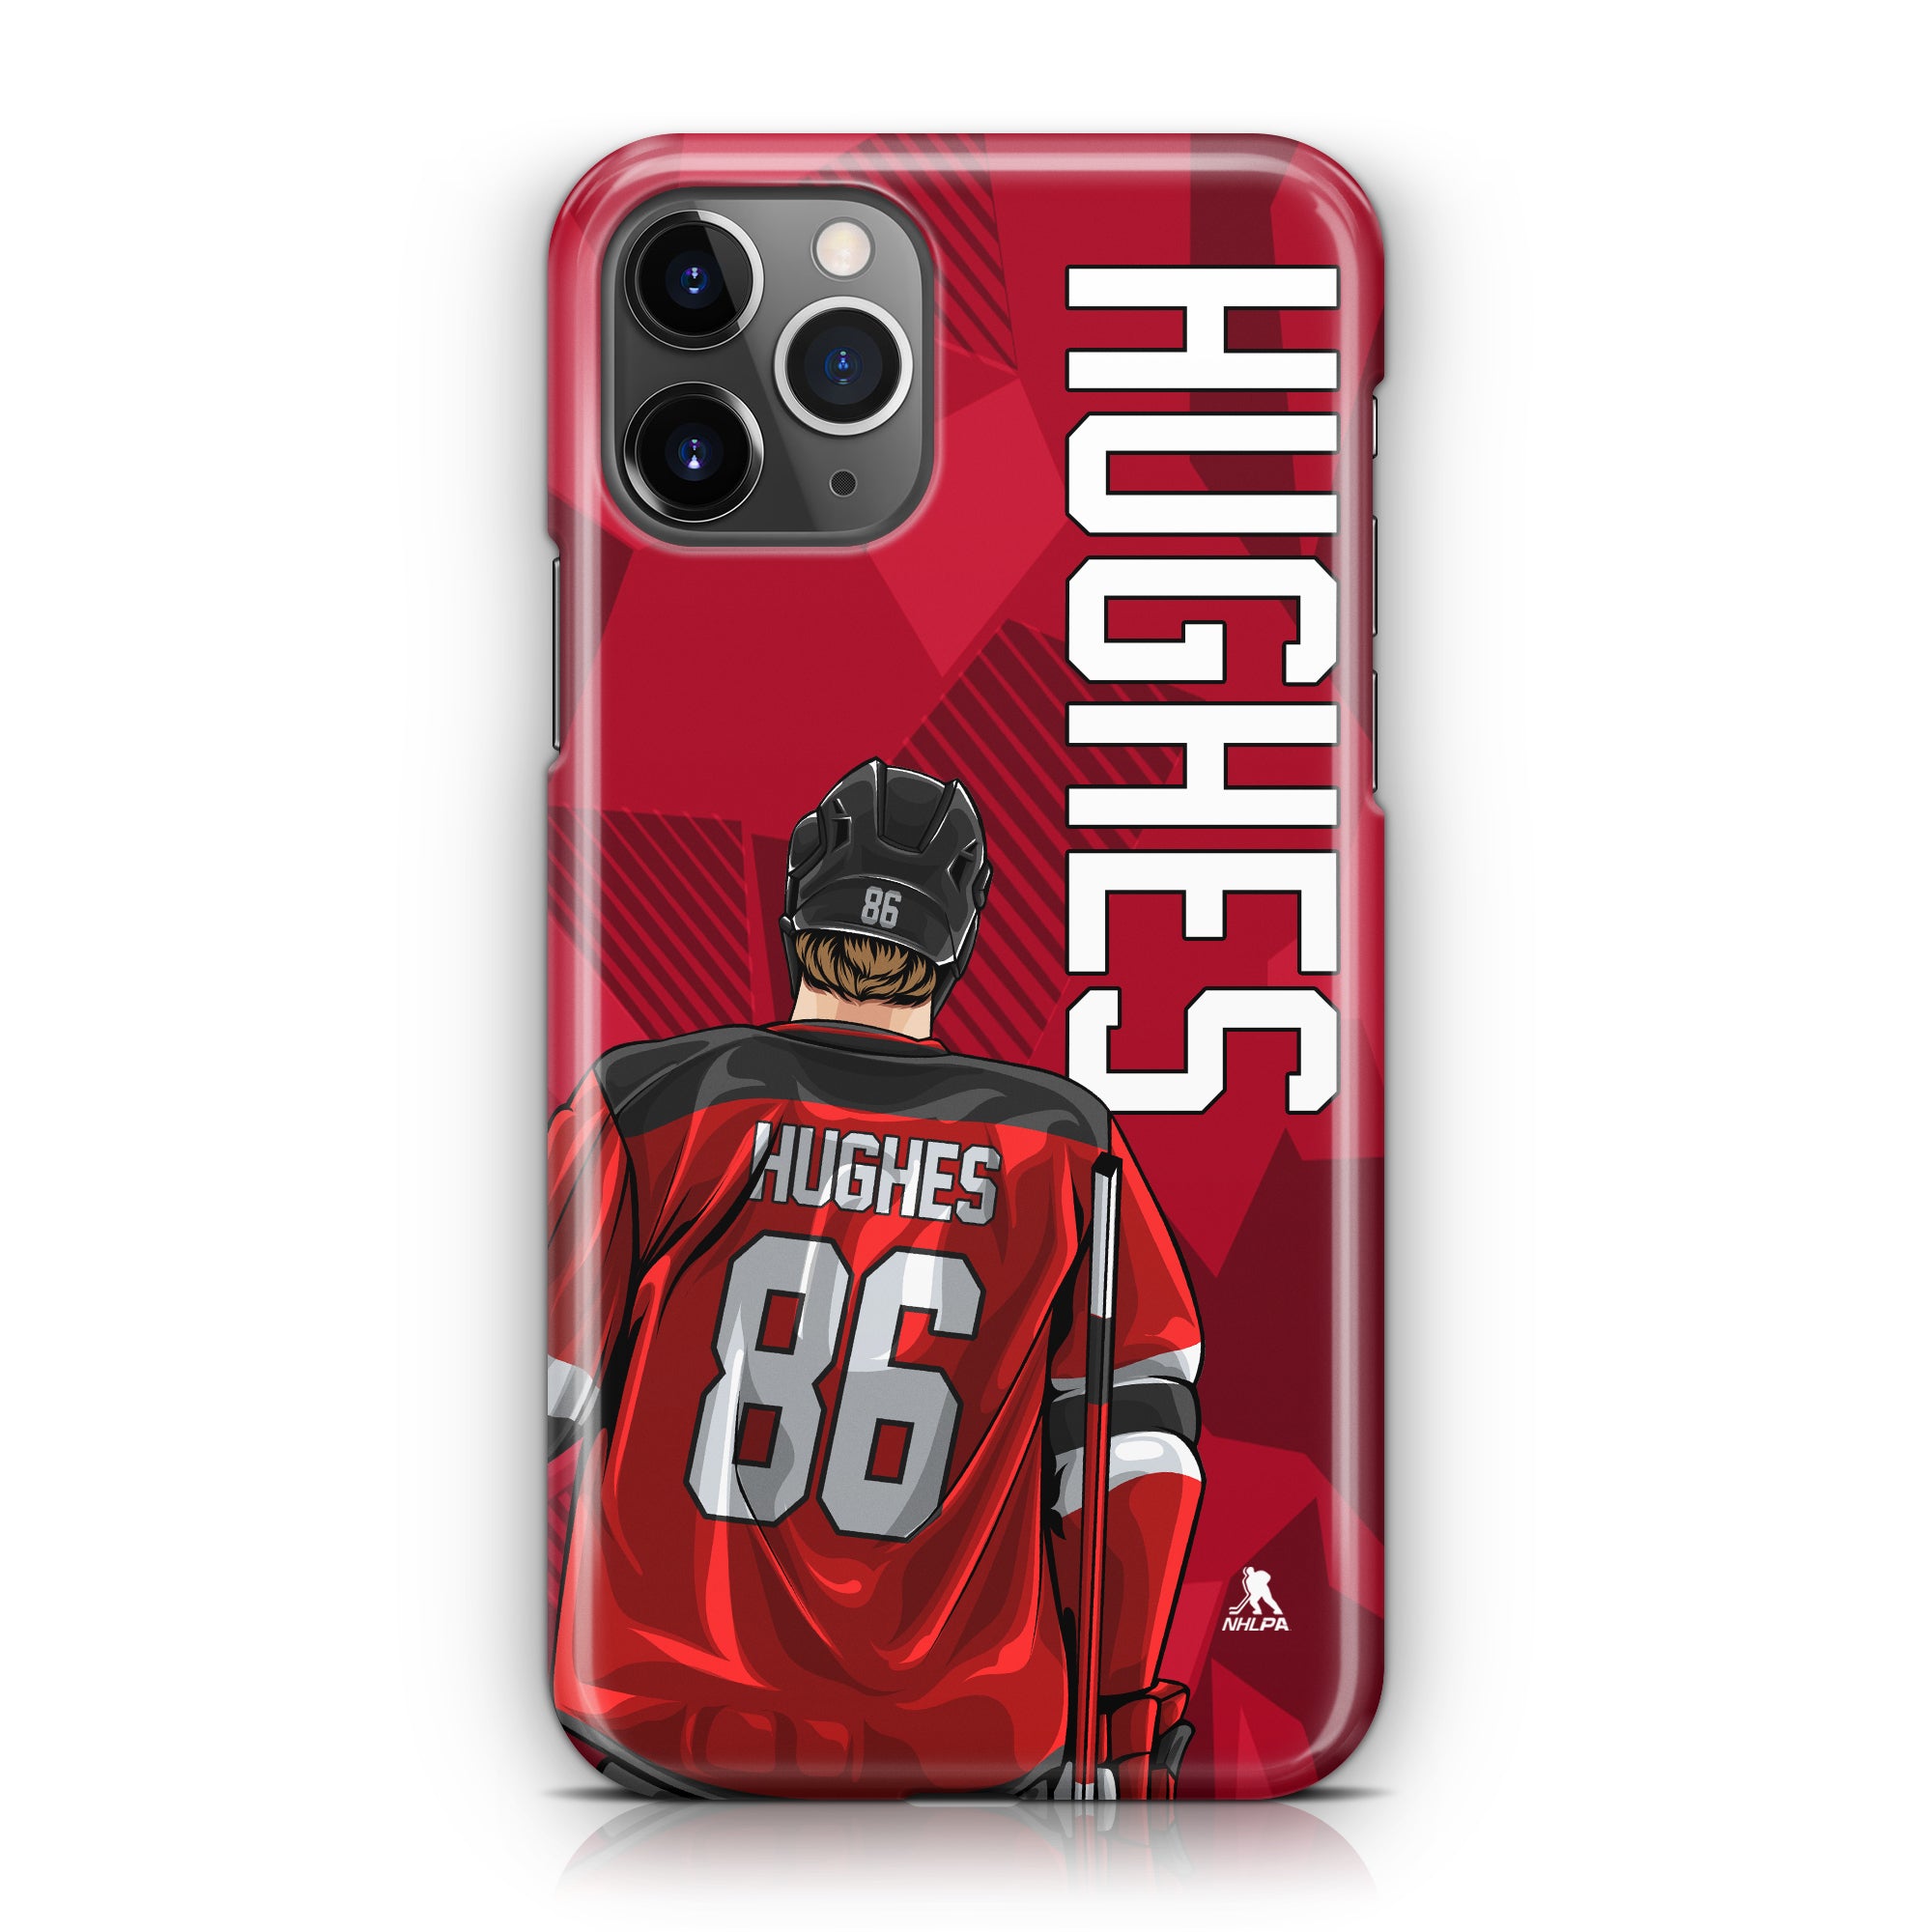 Hughes Star Series 2.0 Case